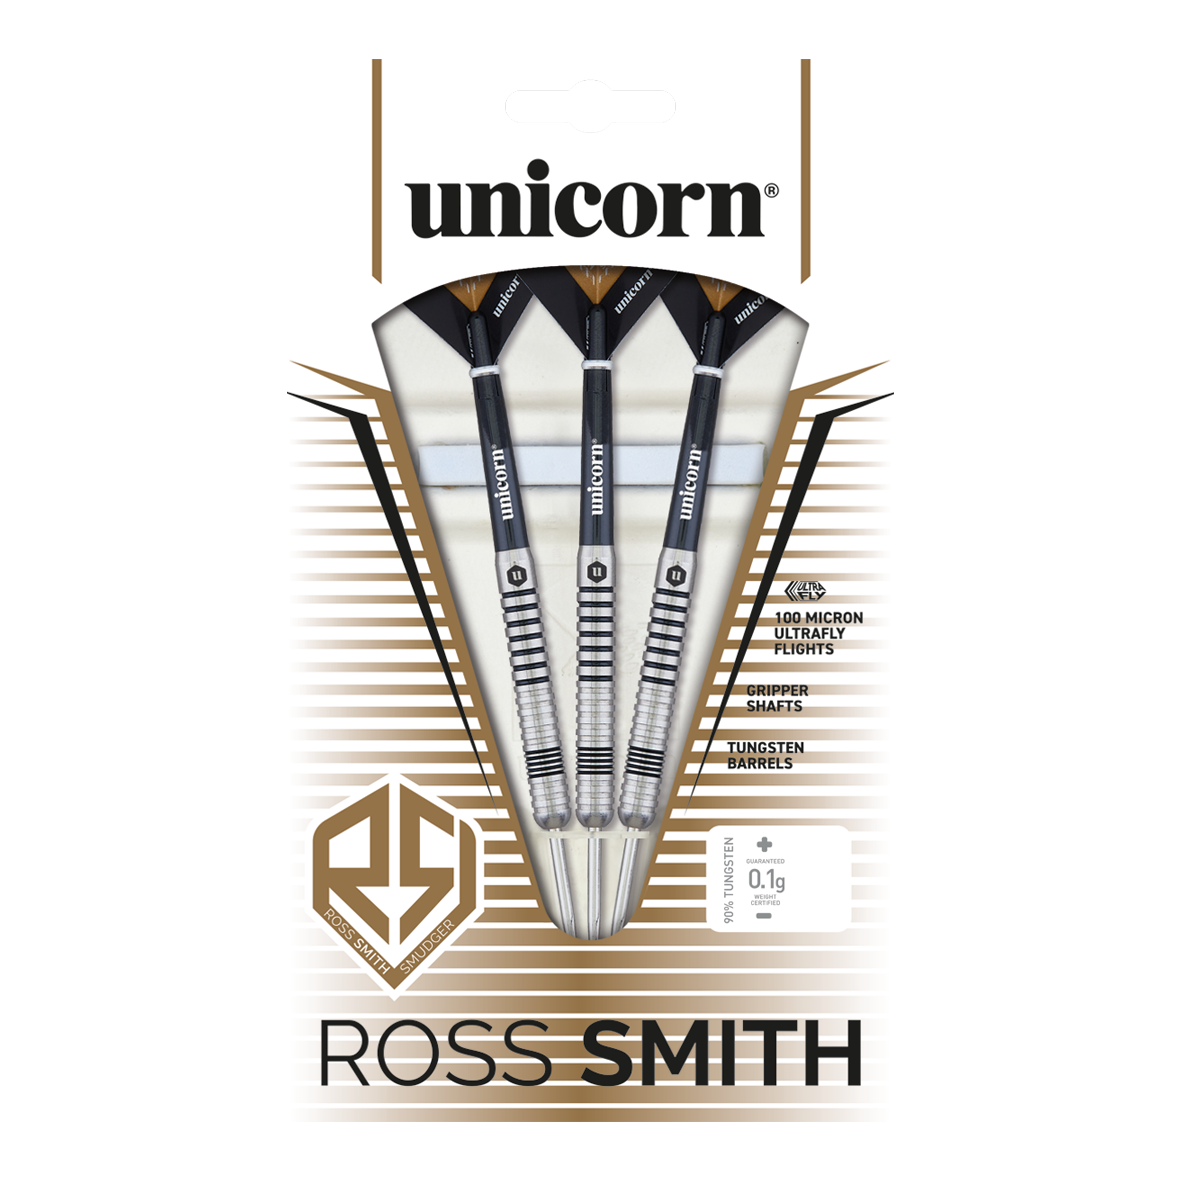 Unicorn Ross Smith Smudger Steeldarts